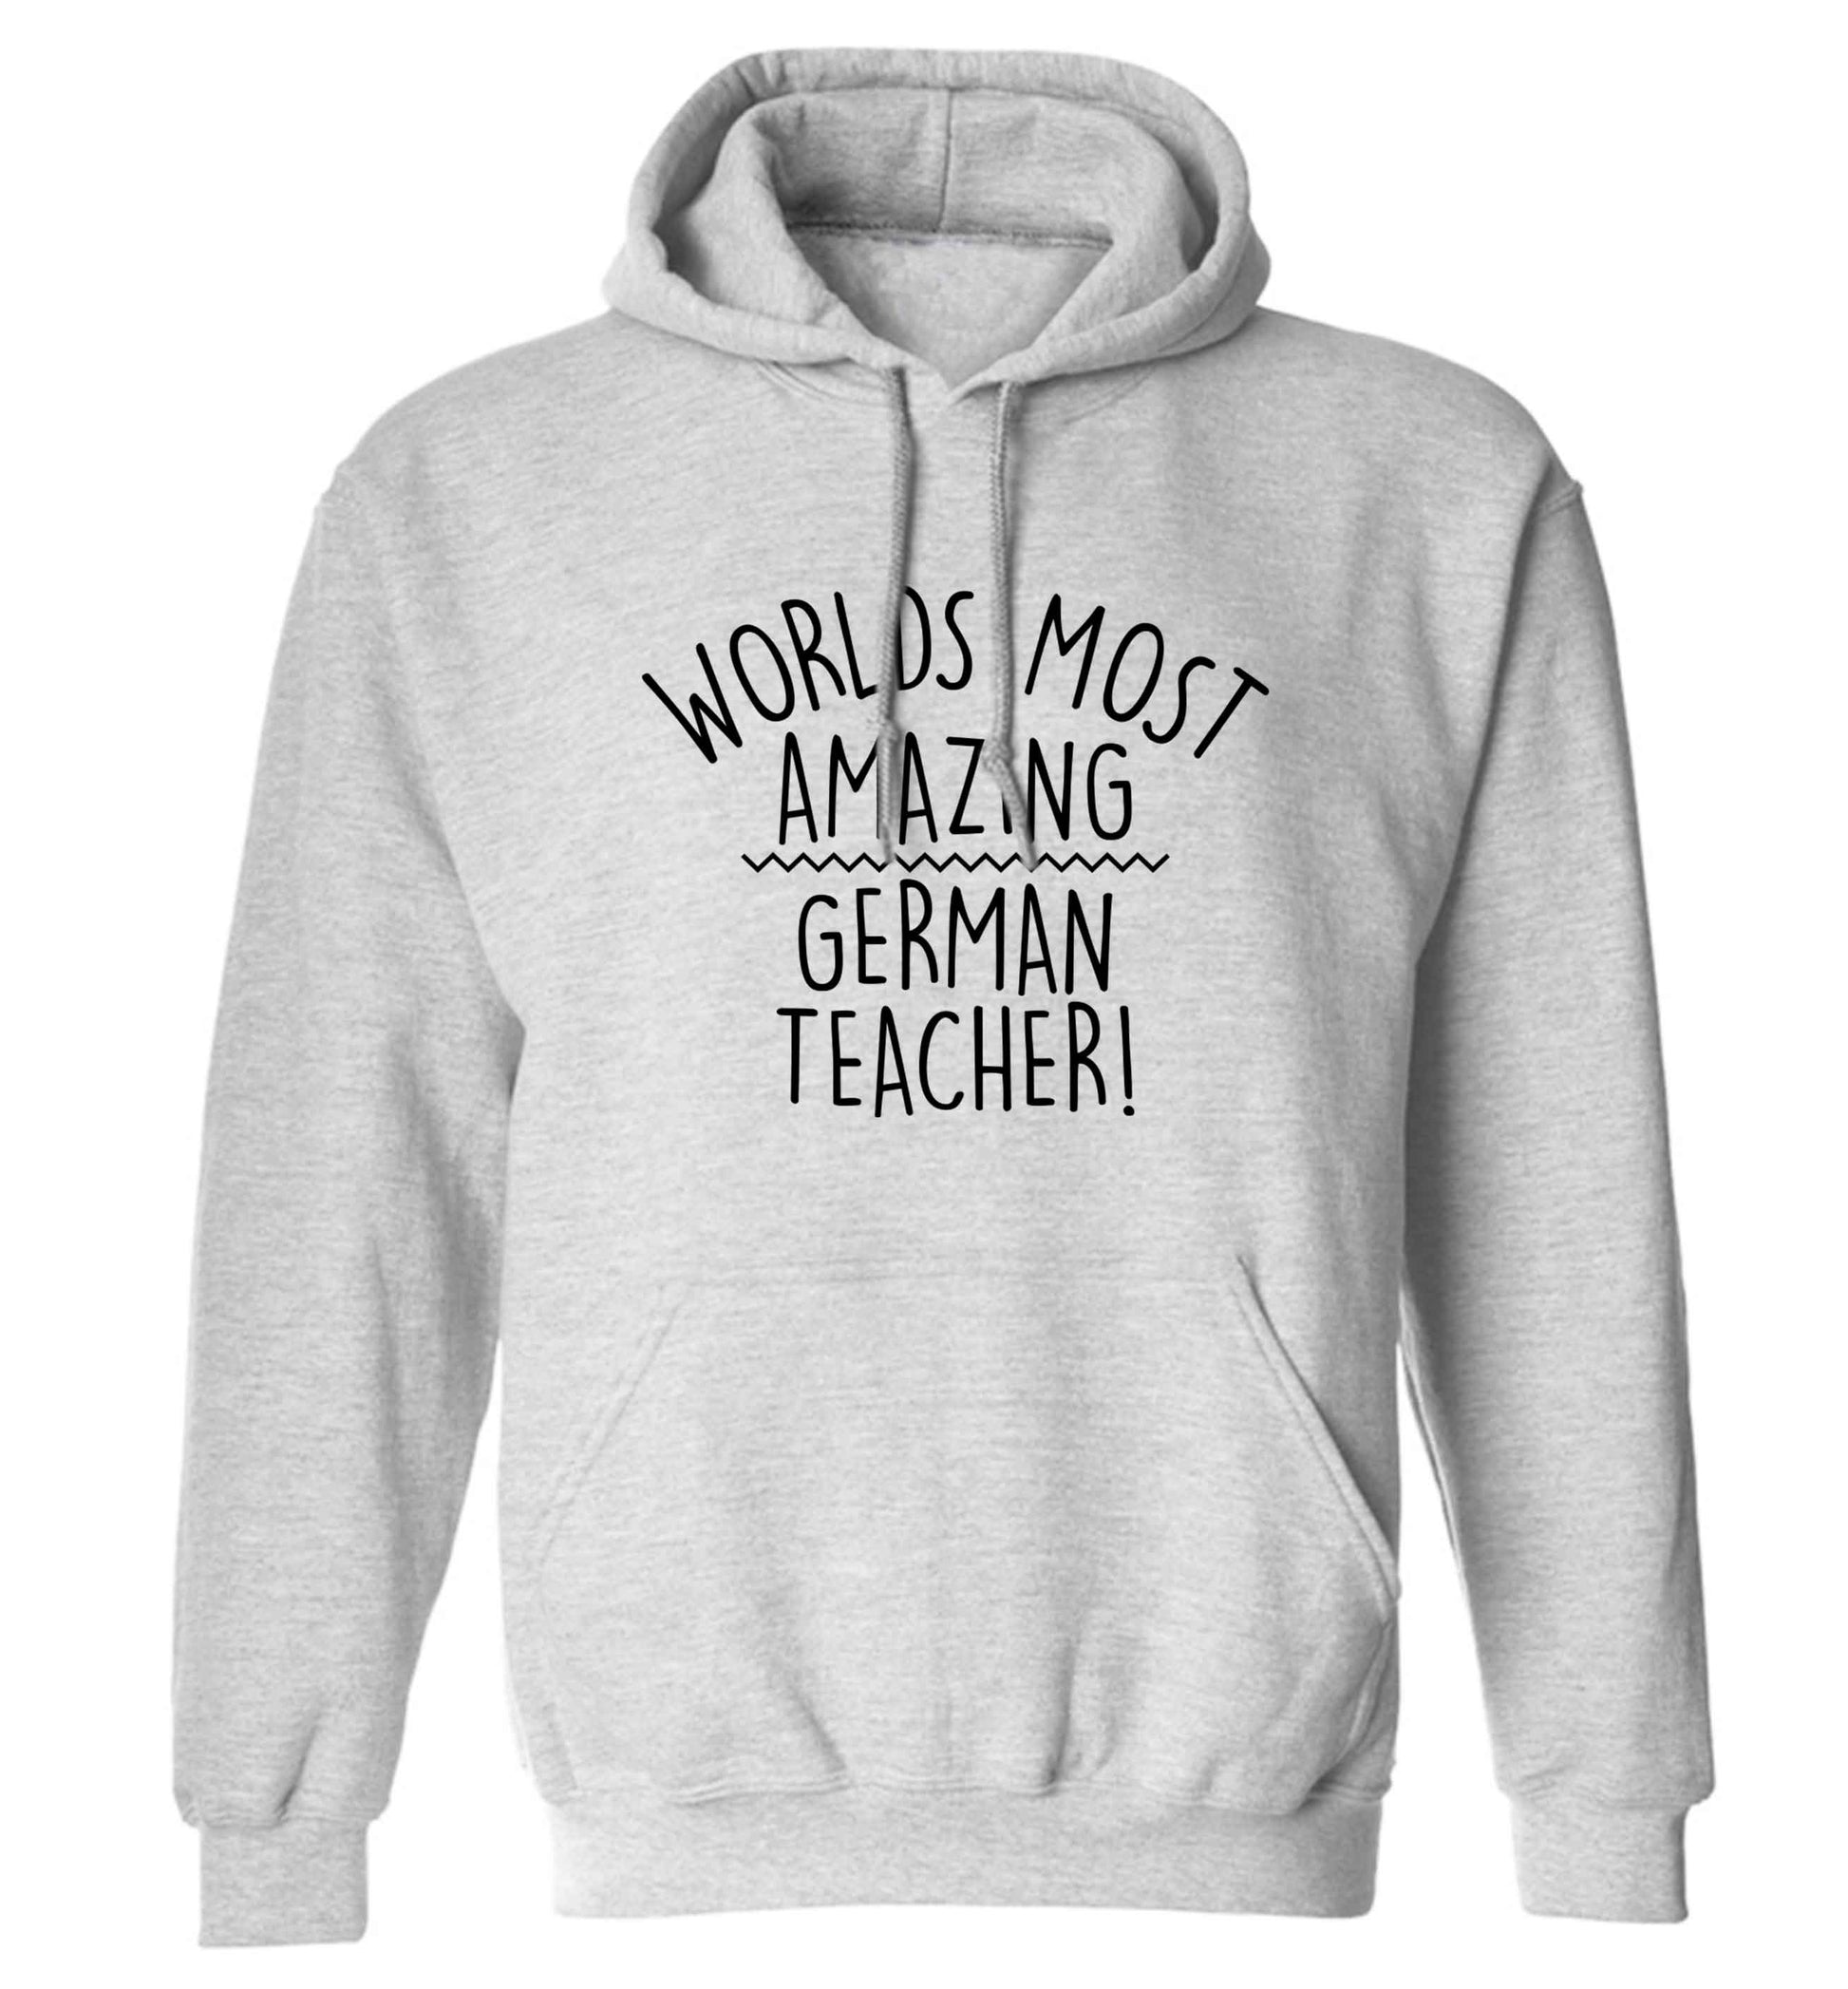 Worlds most amazing German teacher adults unisex grey hoodie 2XL